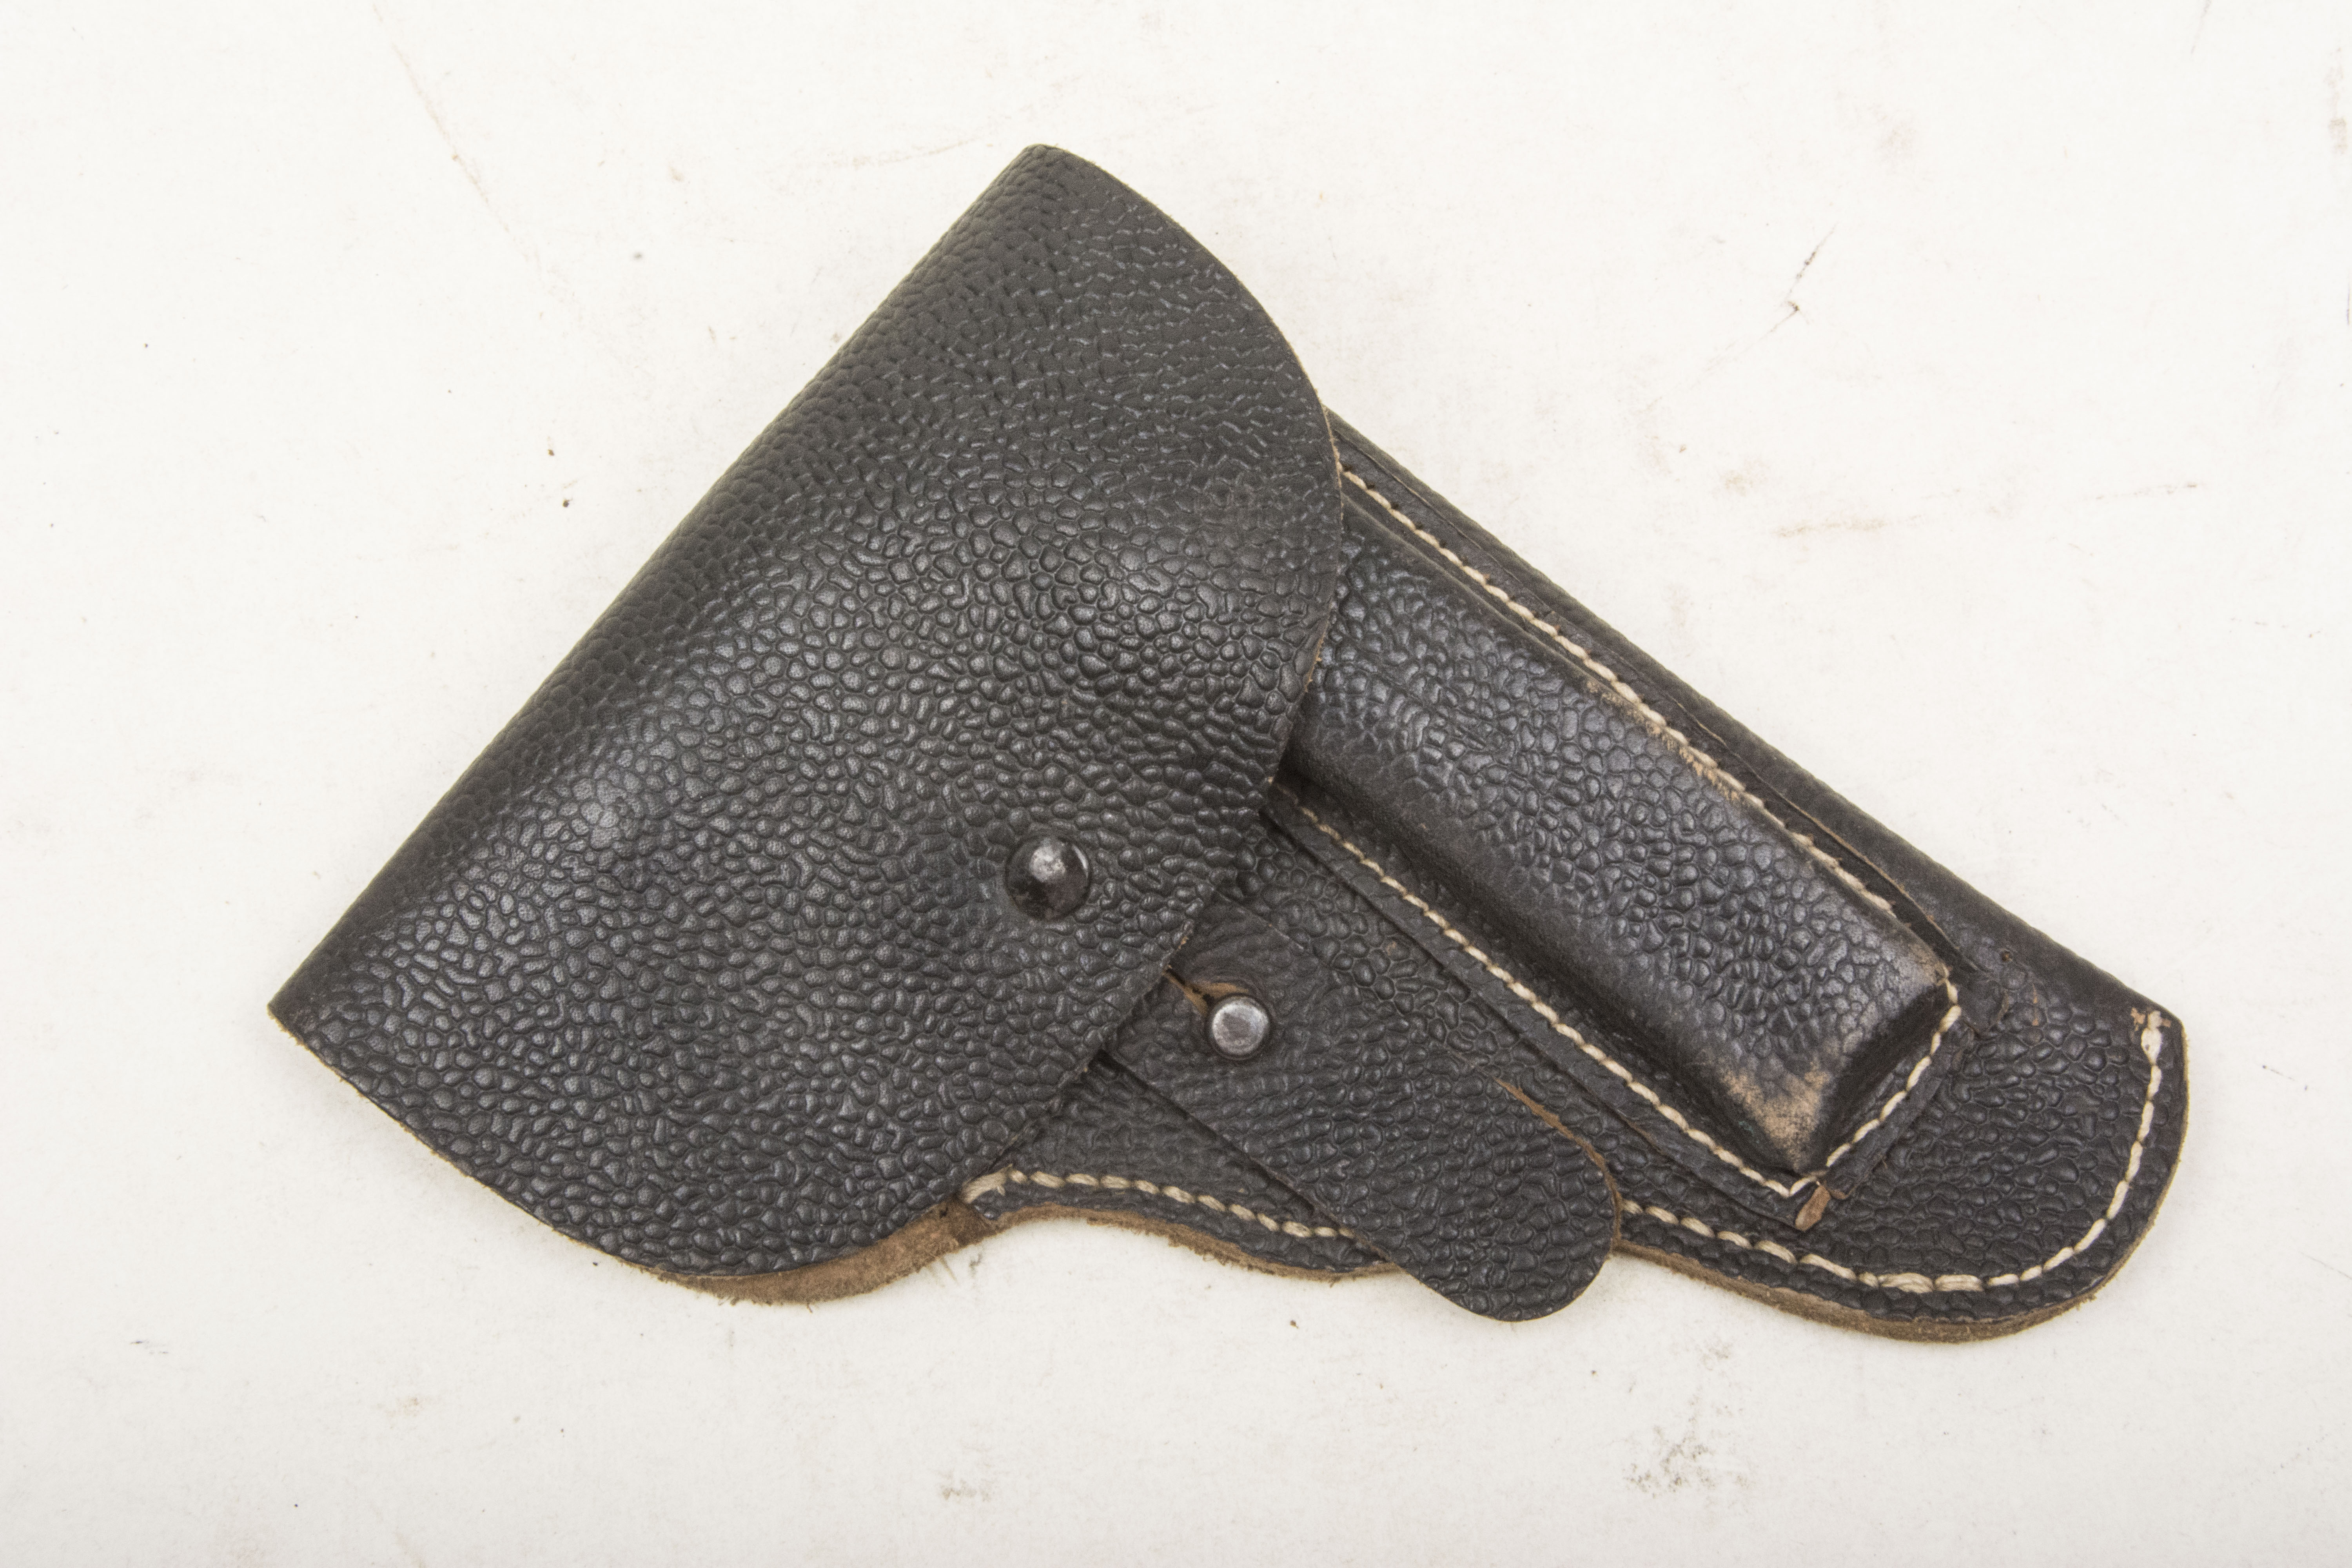 Late war pebbled leather CZ 27 holster – fjm44